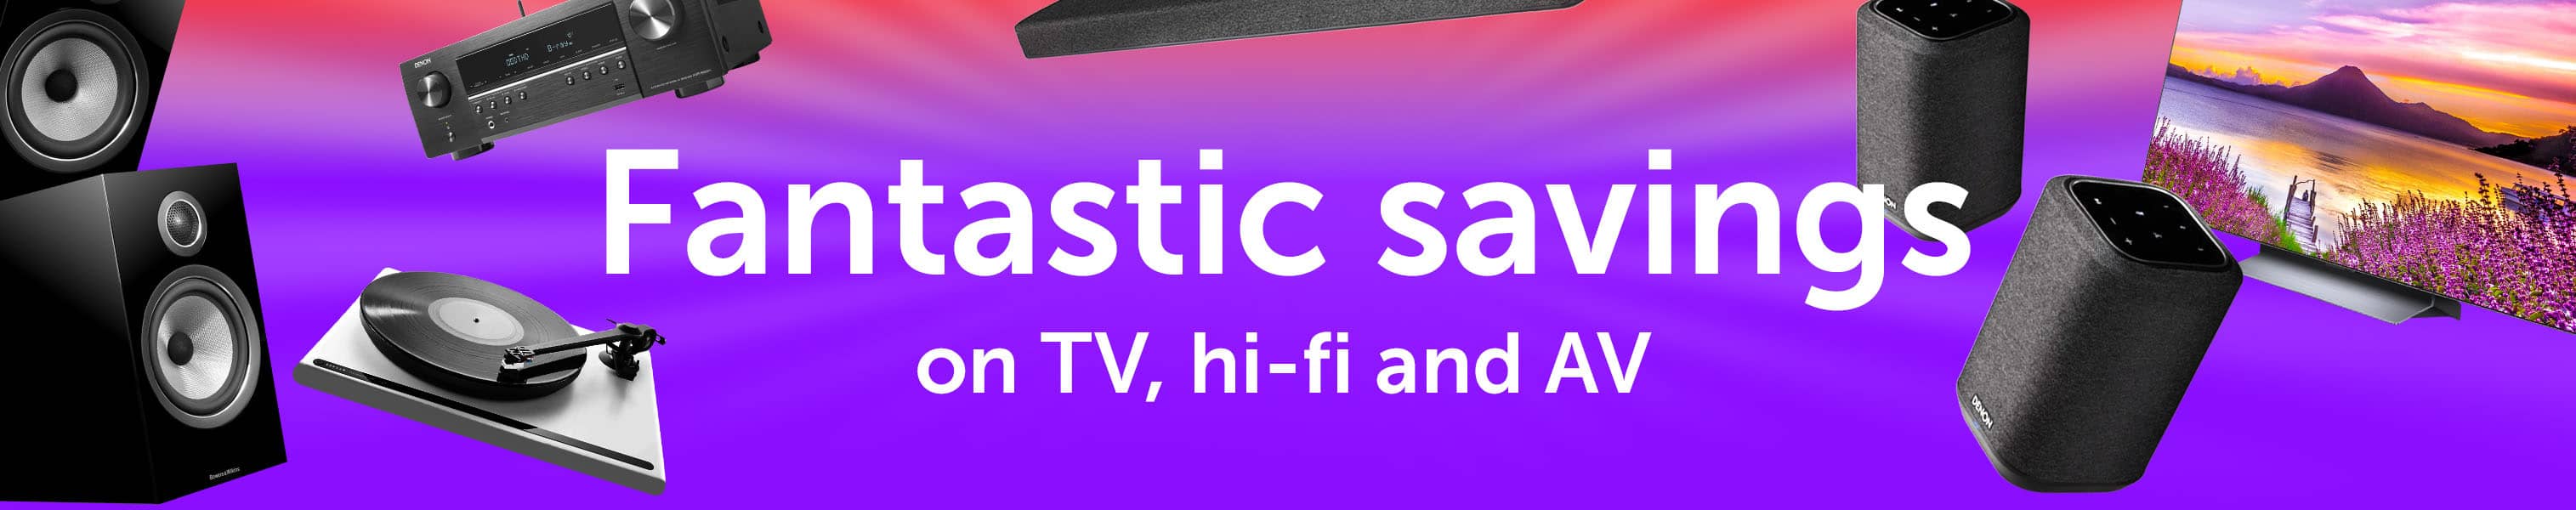 Fantastic savings on TV, hi-fi and AV